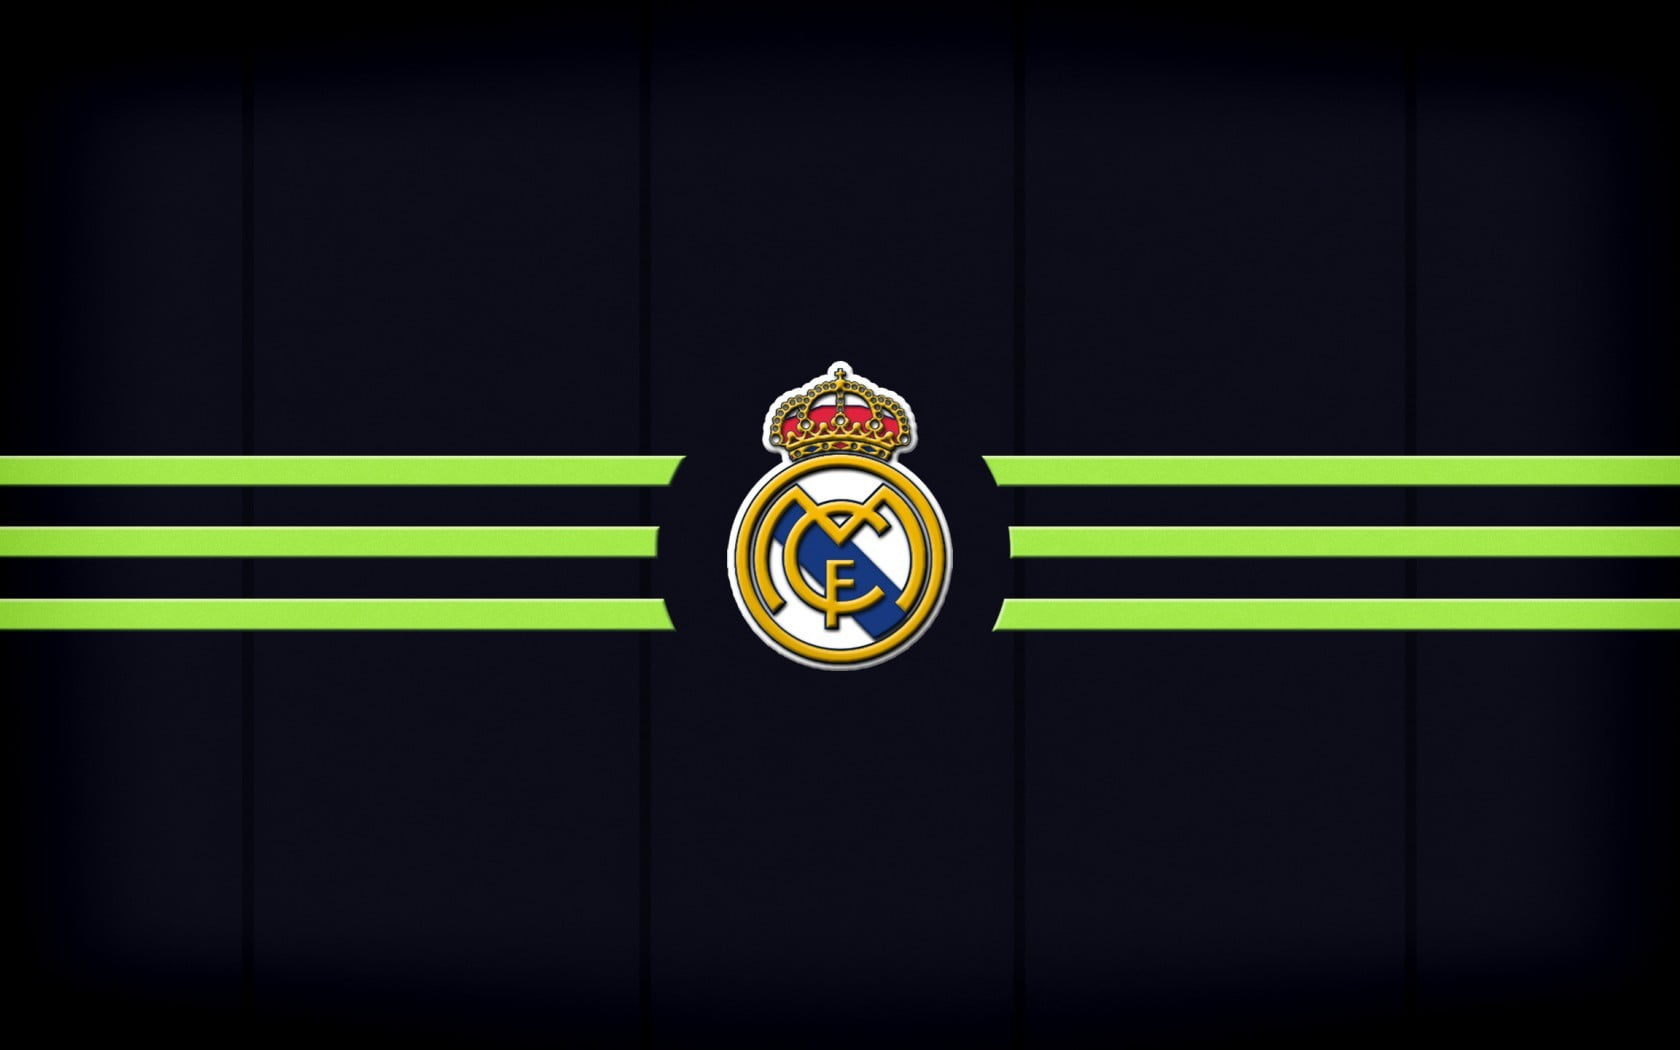 Real Madrid logo, black background, illuminated, green color